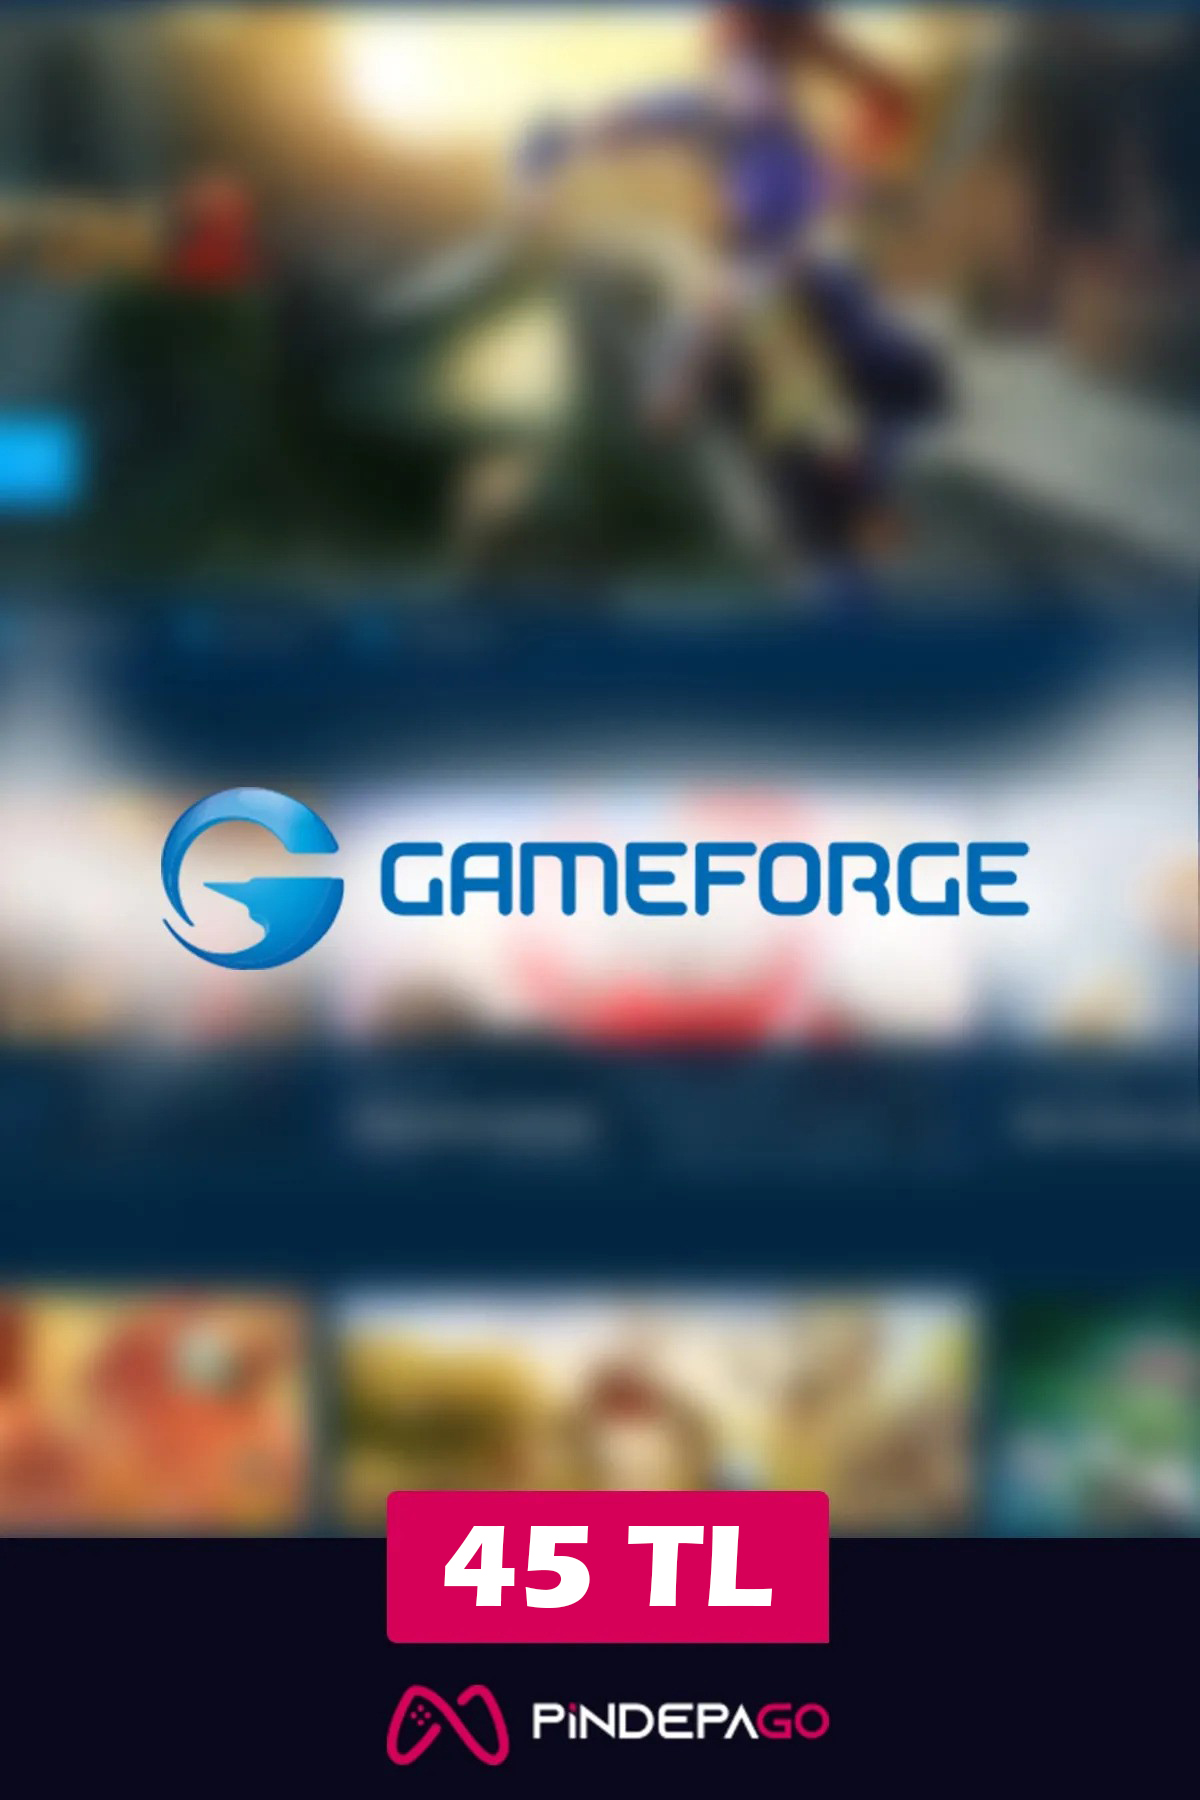 Gameforge 45 TL